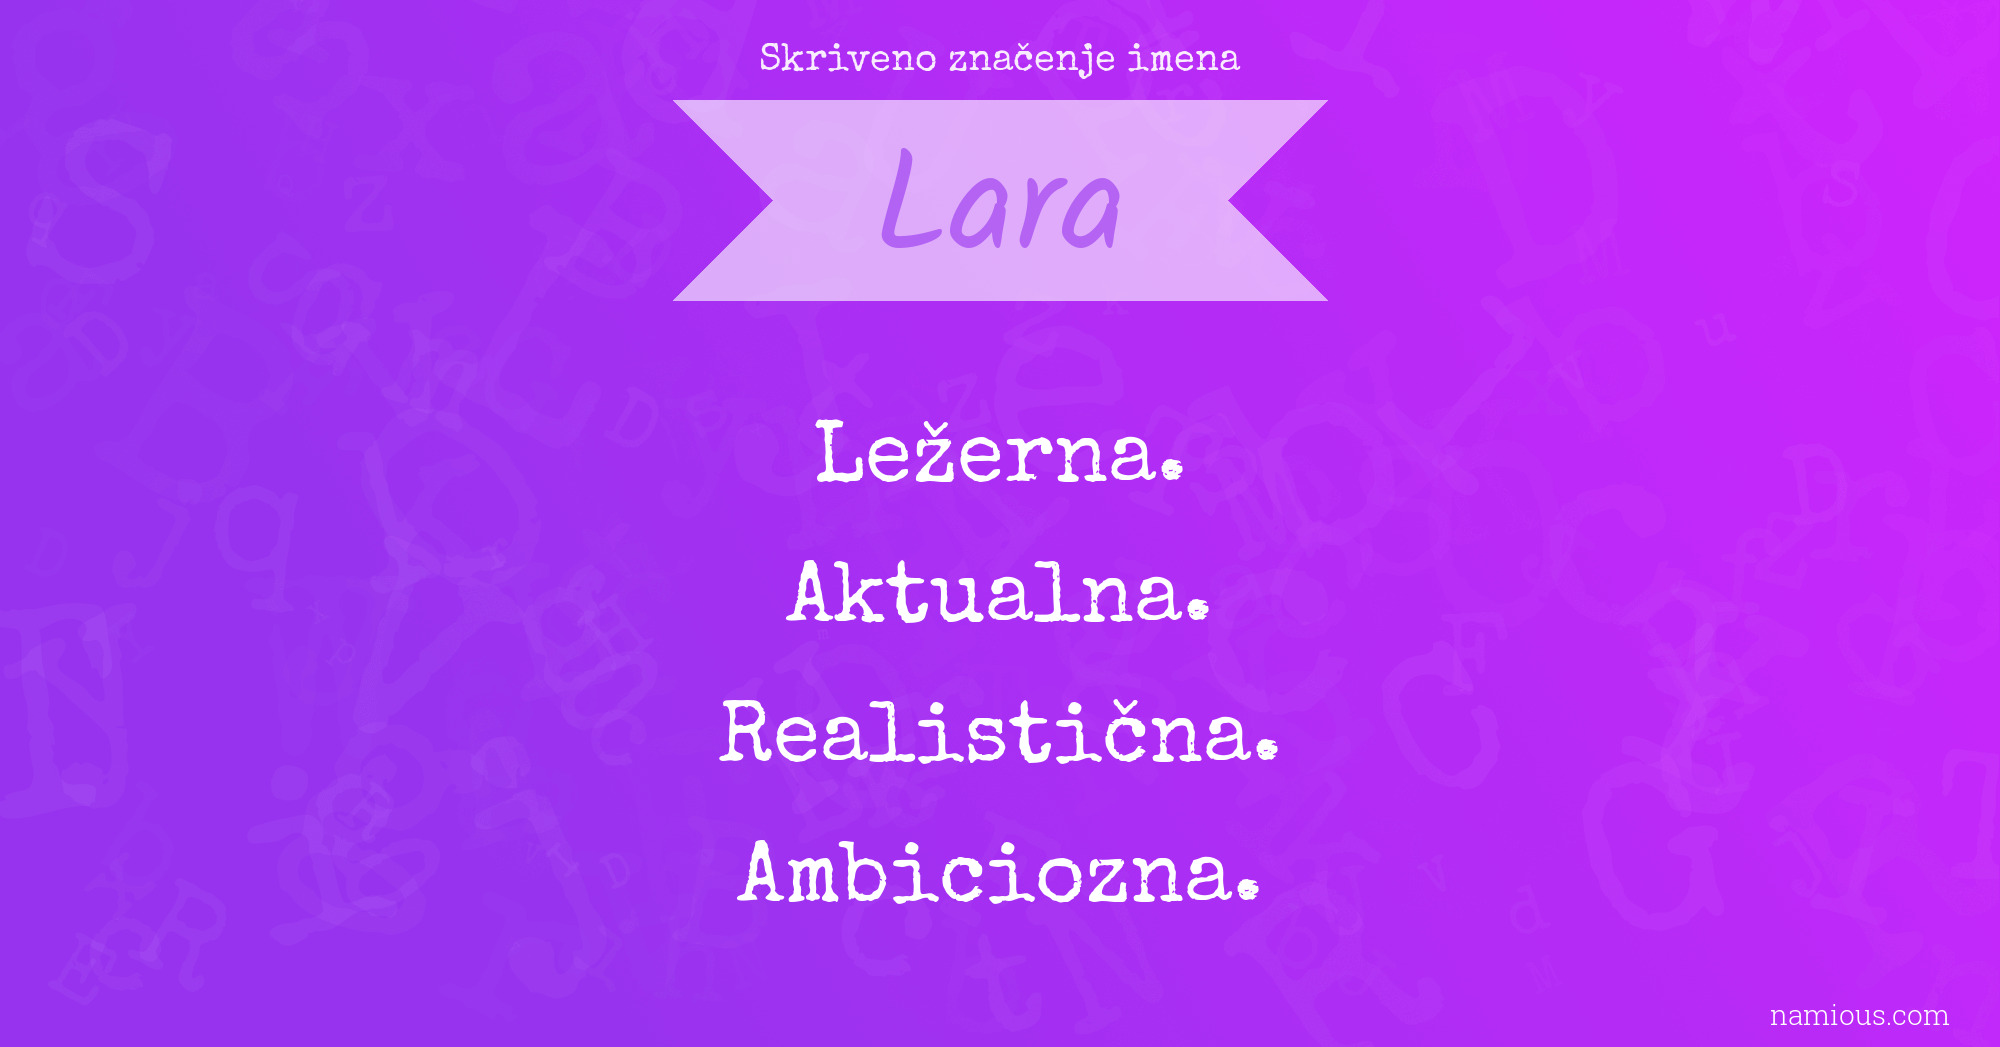 Skriveno značenje imena Lara